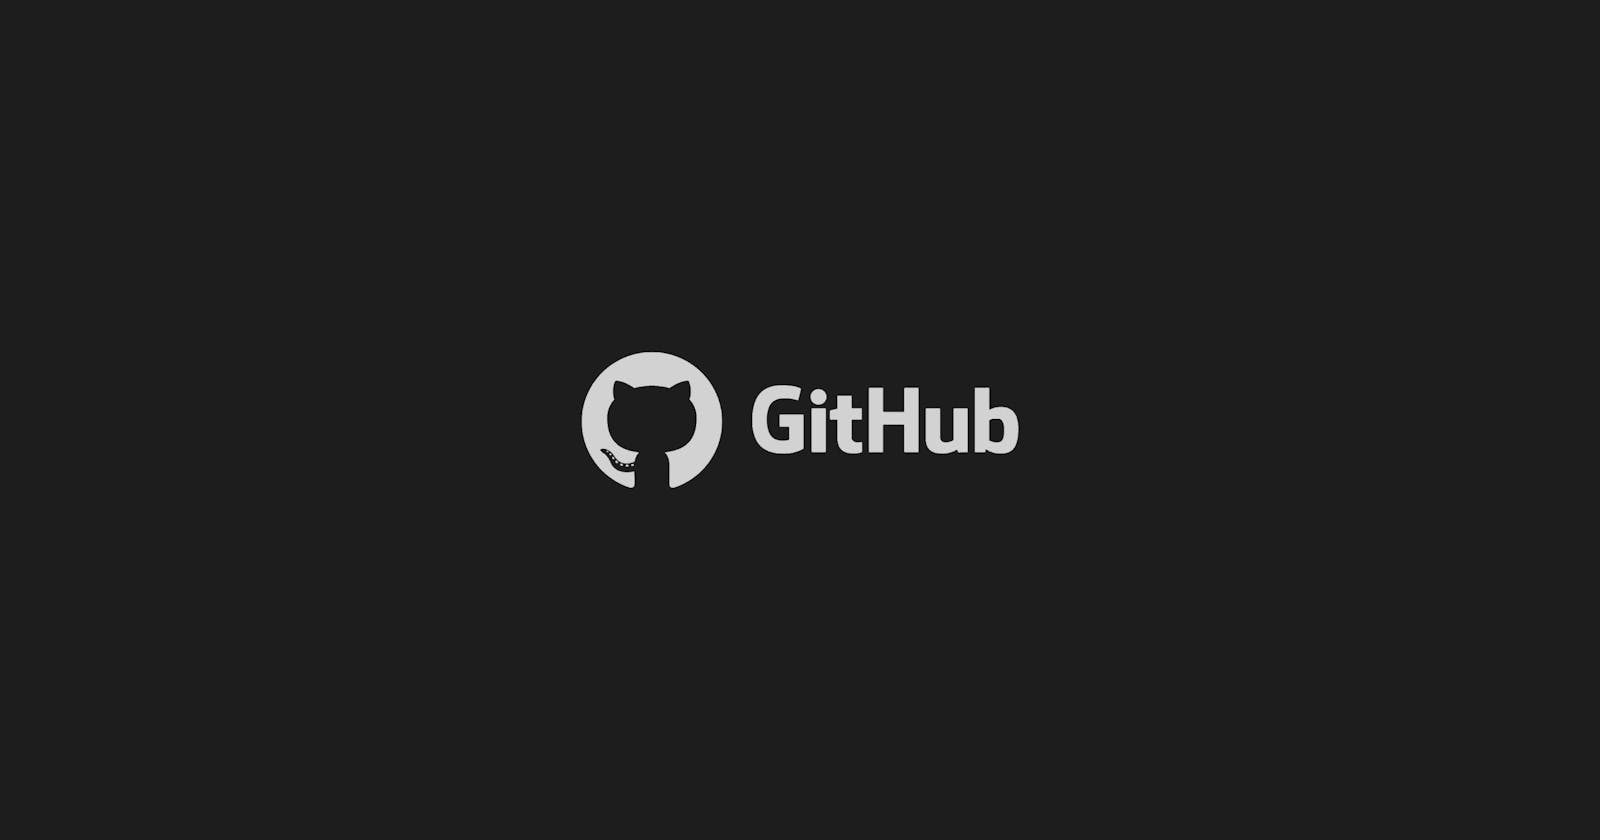 Version Control: Git & GitHub